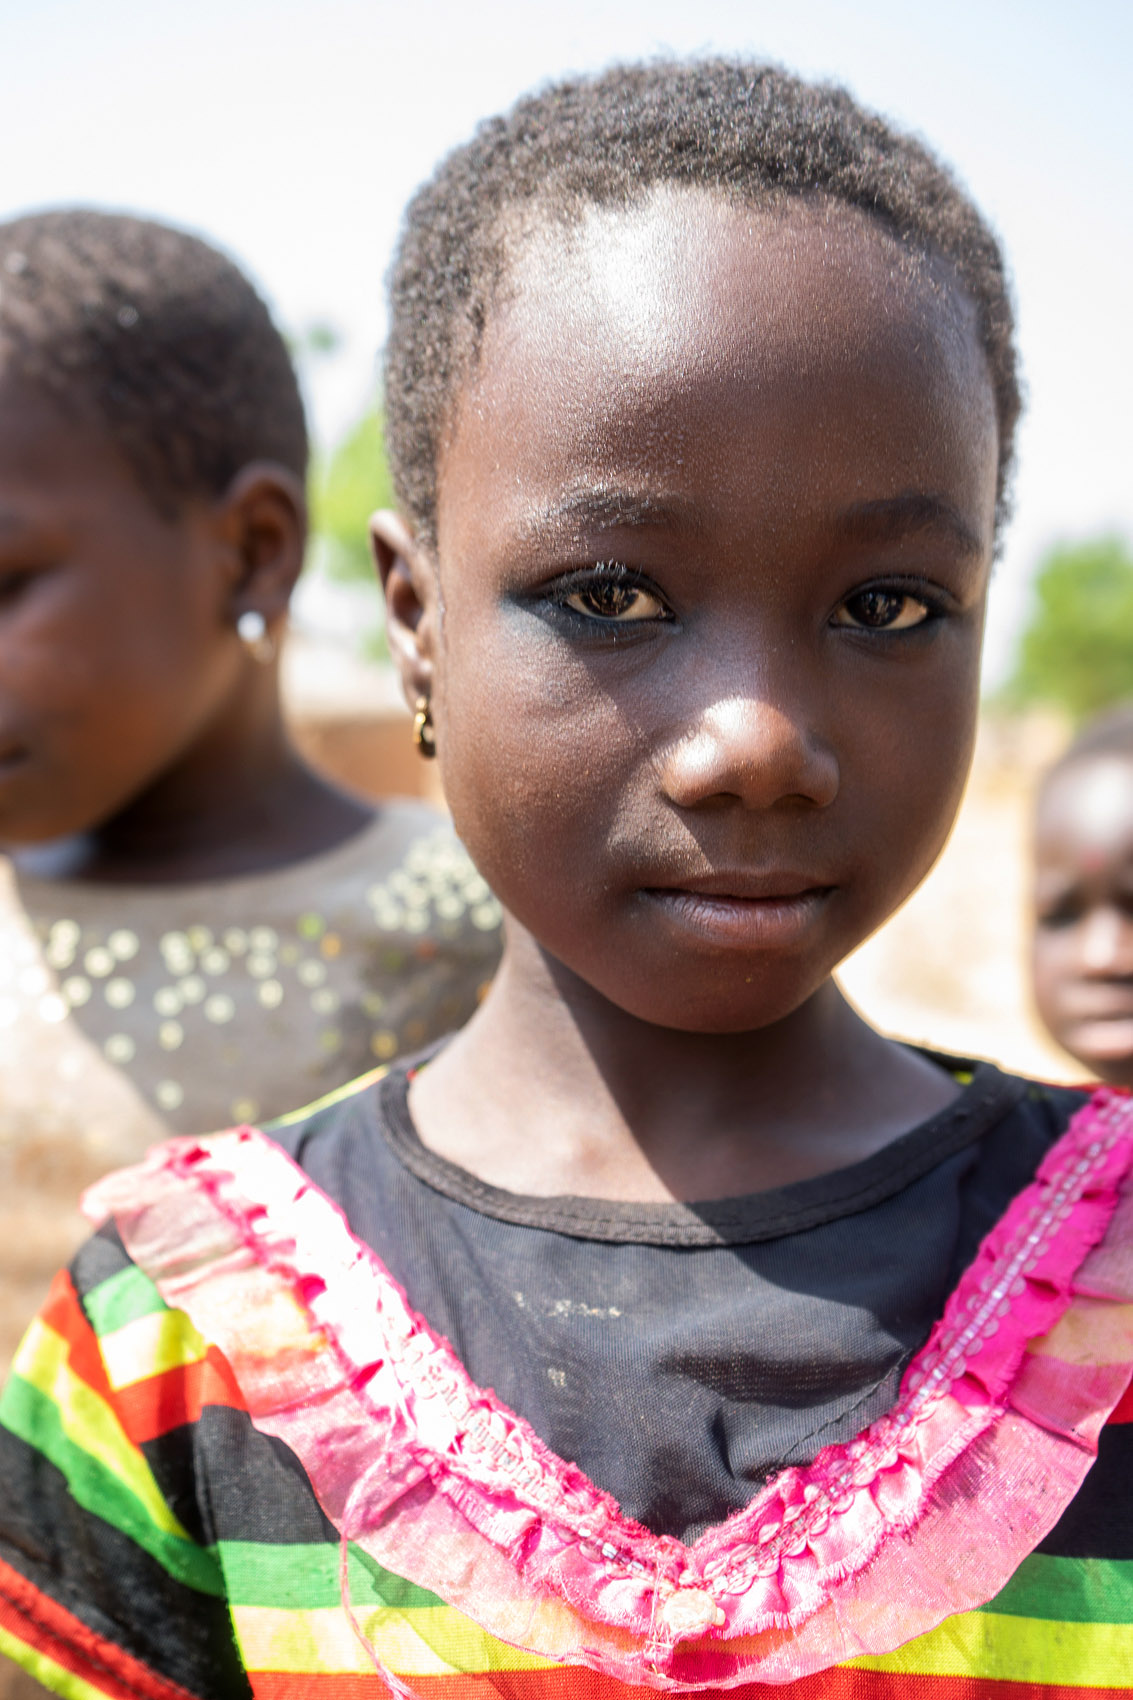 Mädchen im Ghana Kleid